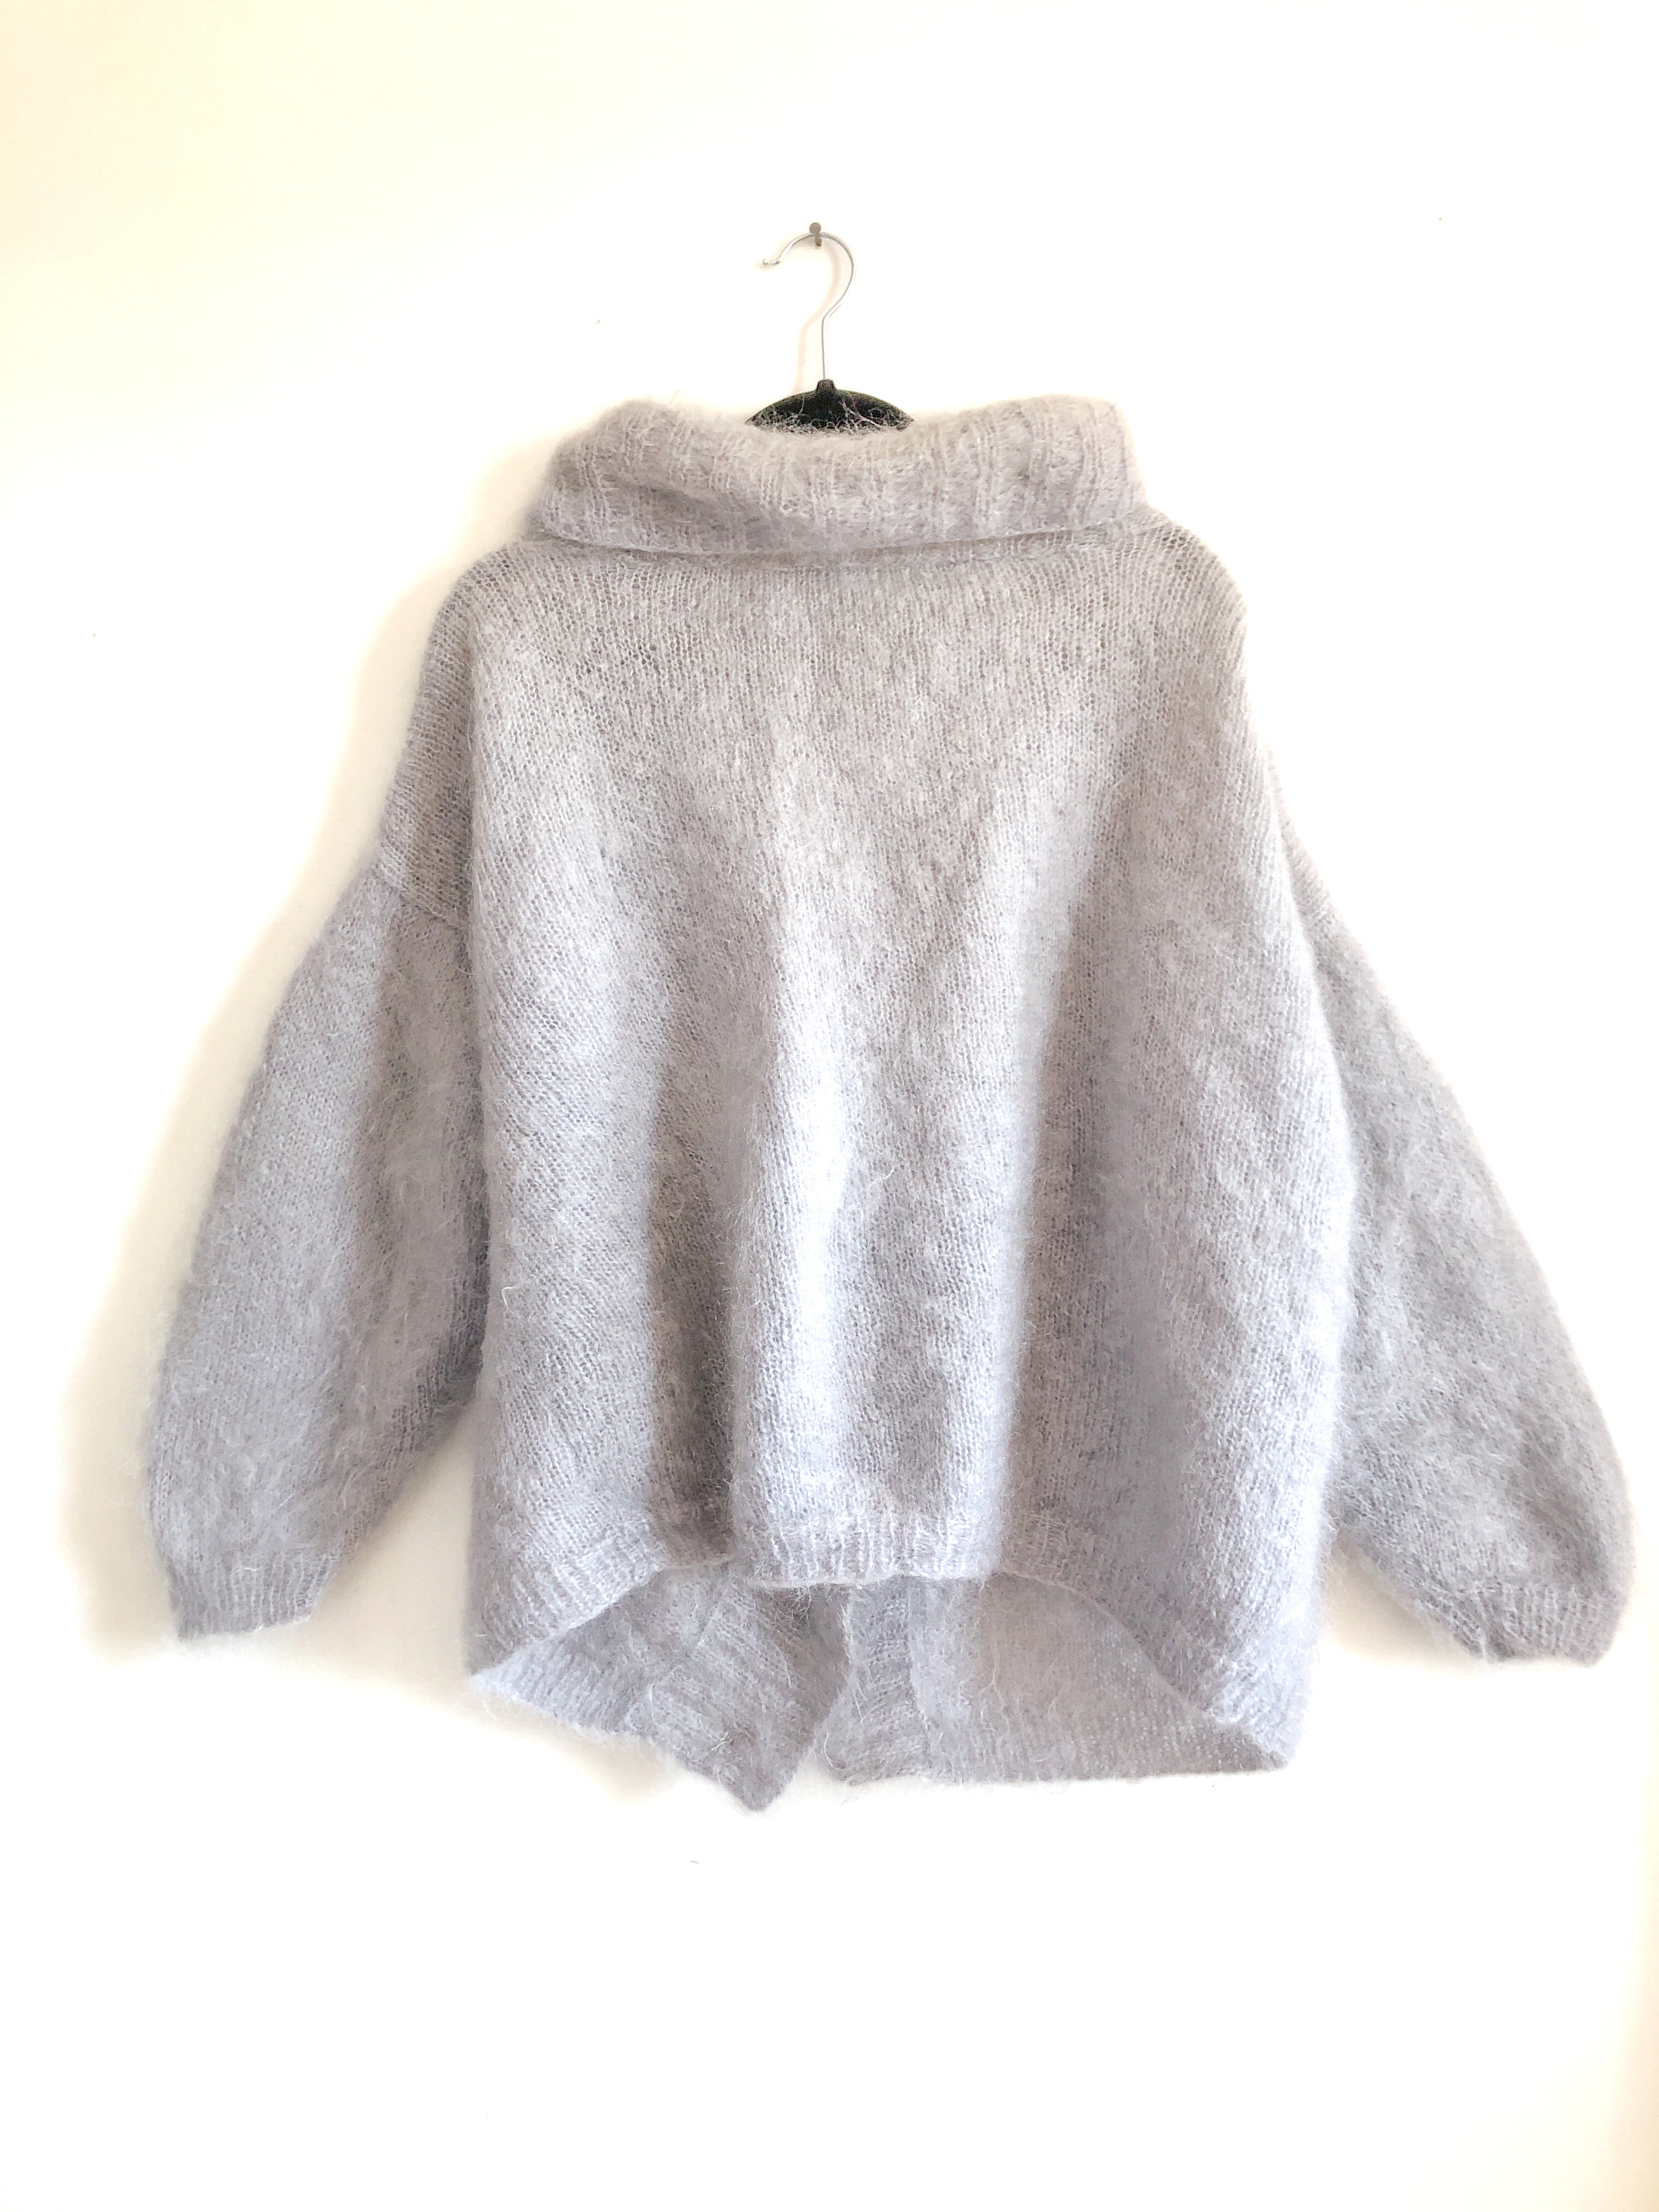 Powder Blue Mohair Cardigan Sweater, Size Medium - XL